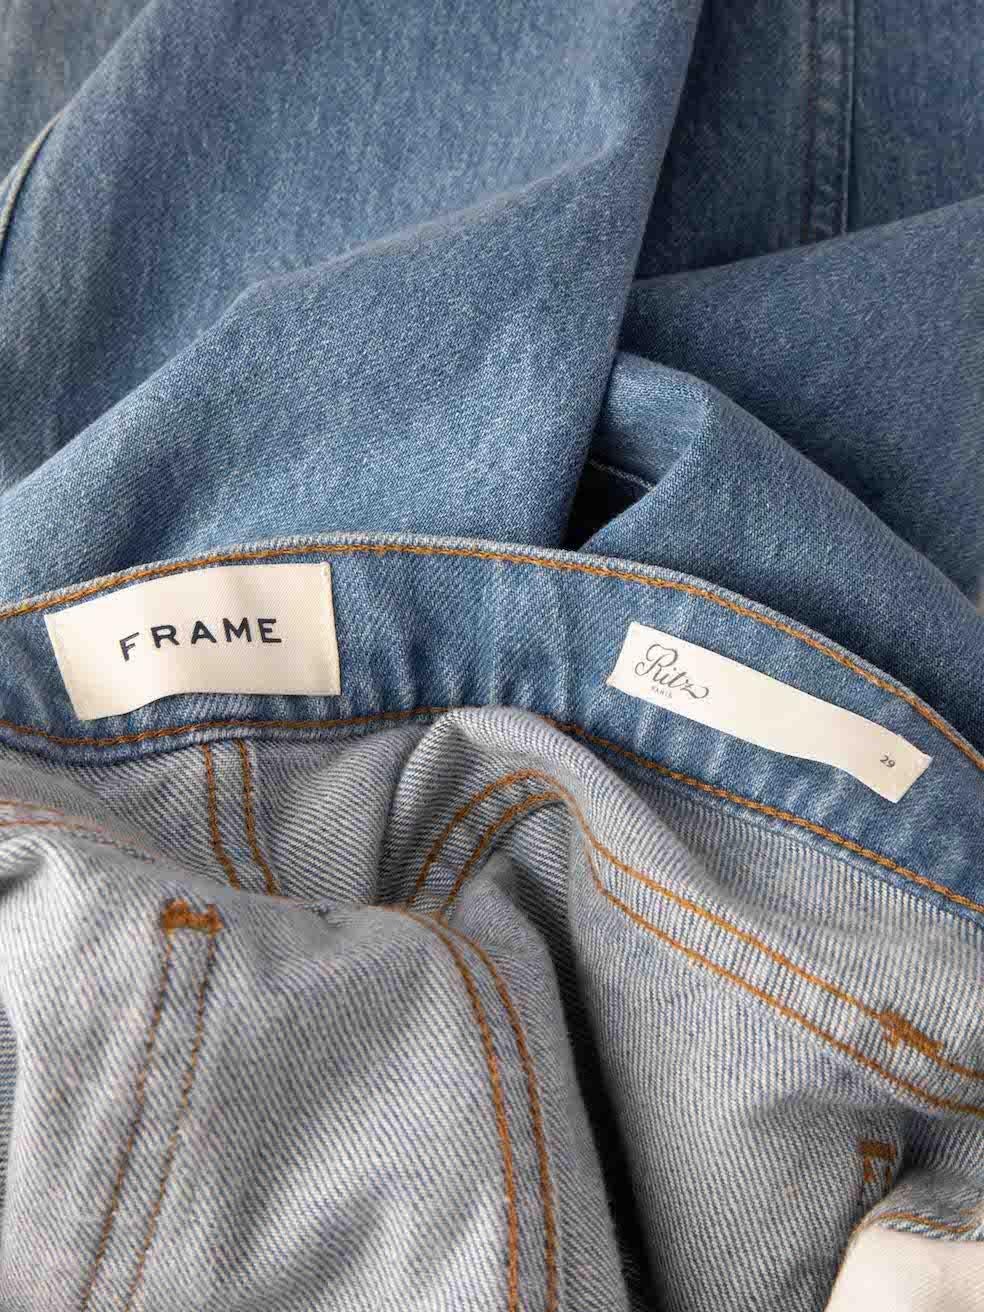 FRAME x Ritz - Jean court en jean bleu, taille M en vente 1